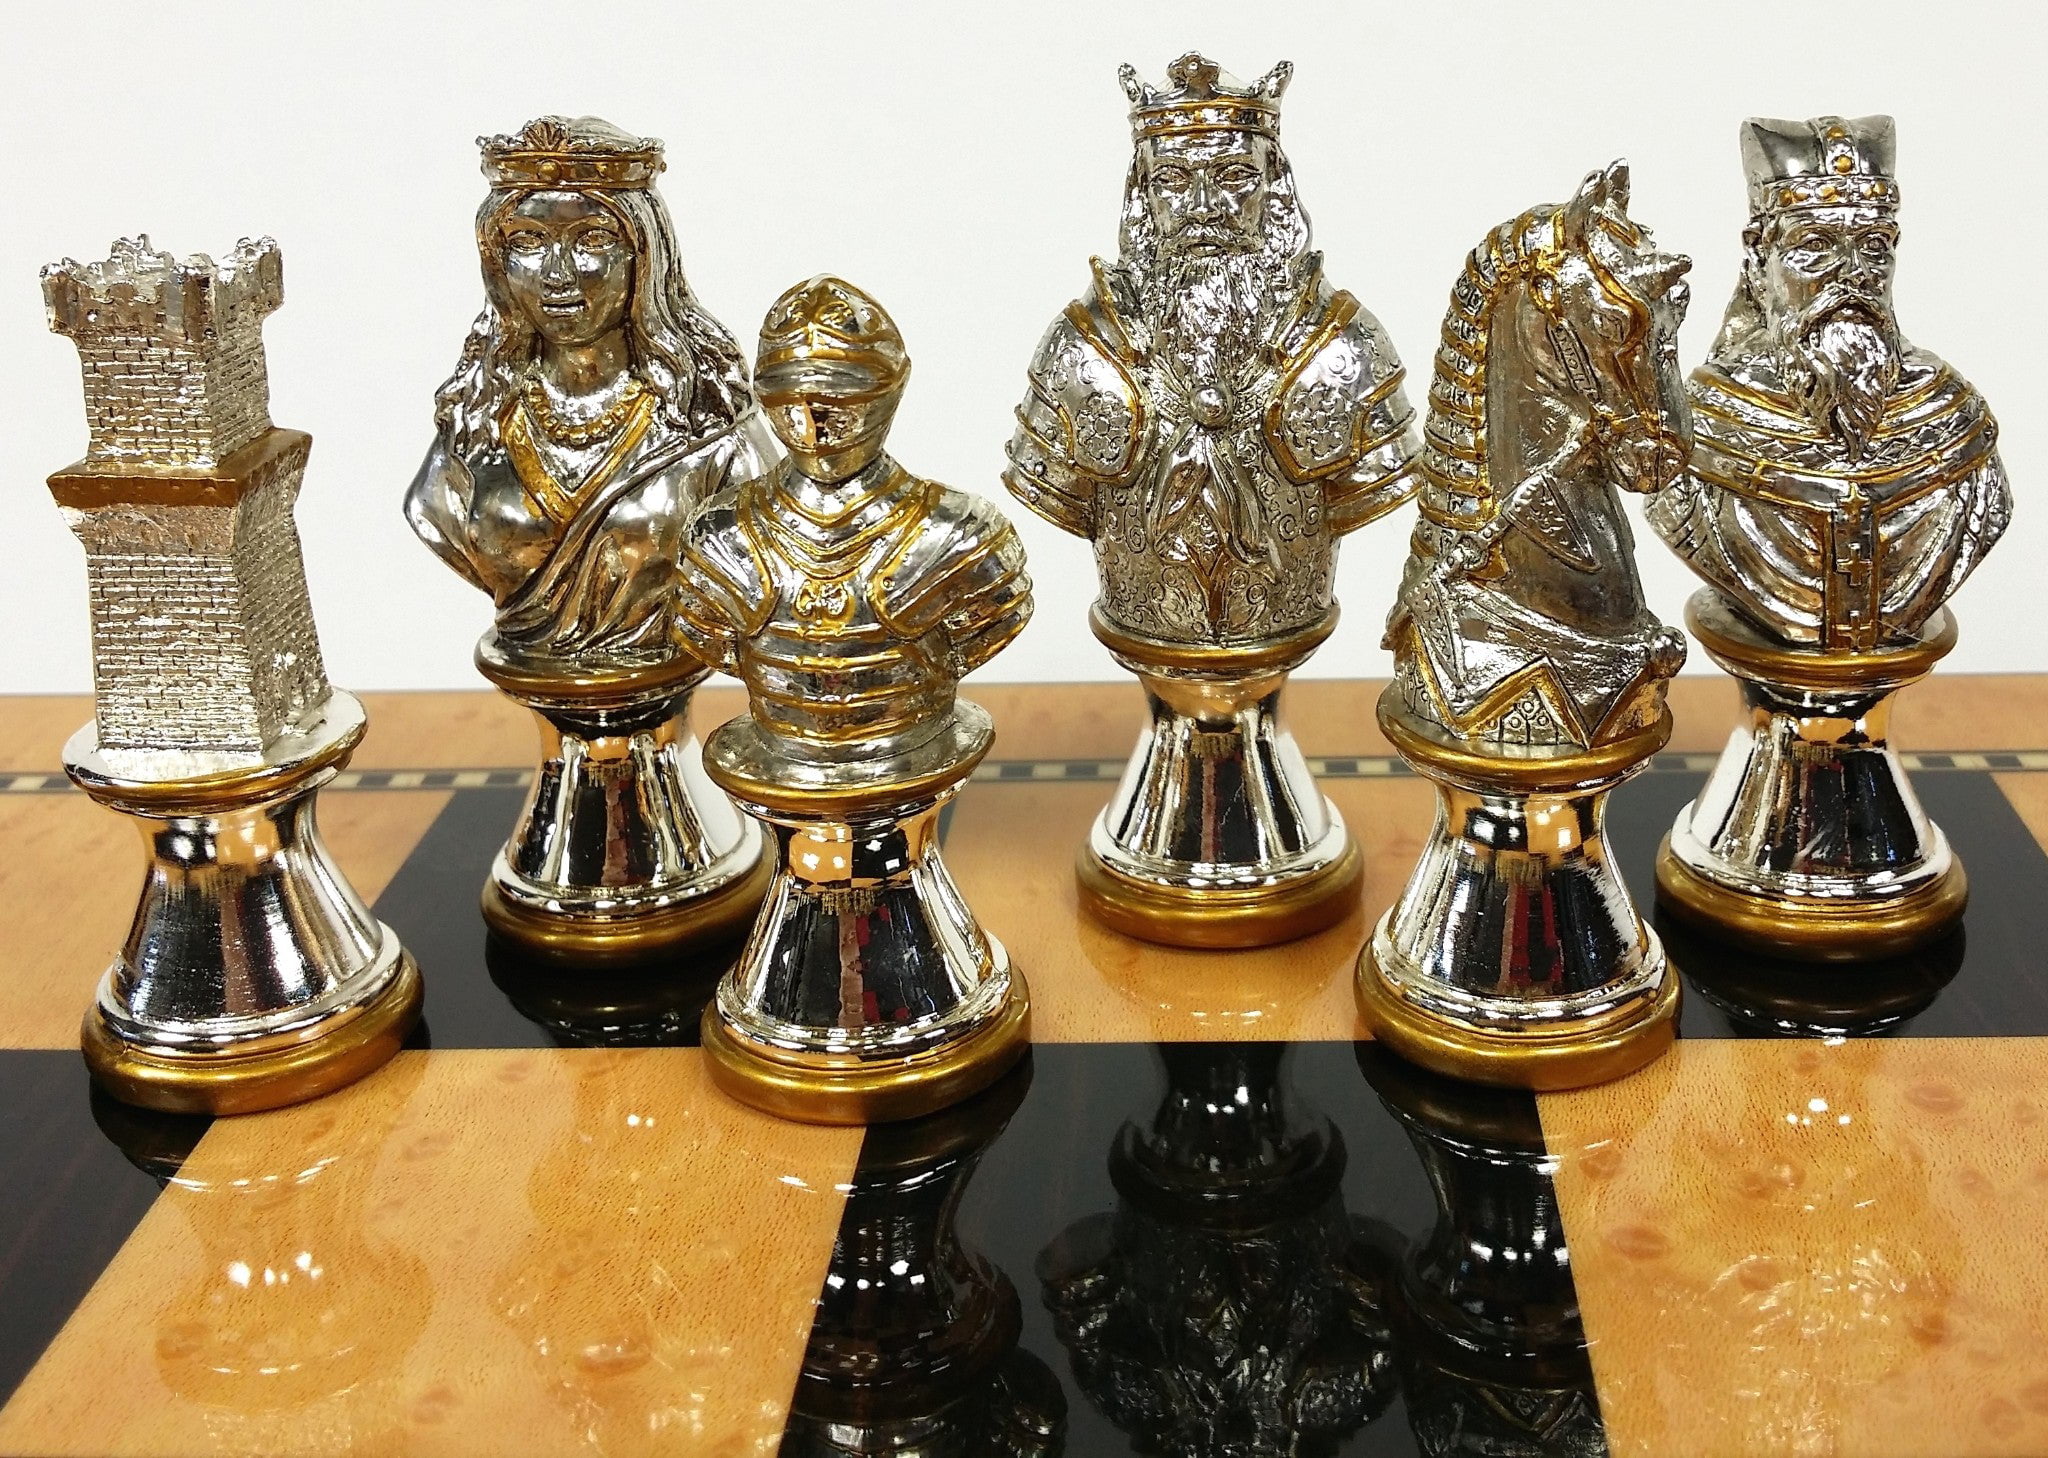 Medieval Theme Gold & Silver Tone Metal Chess Set